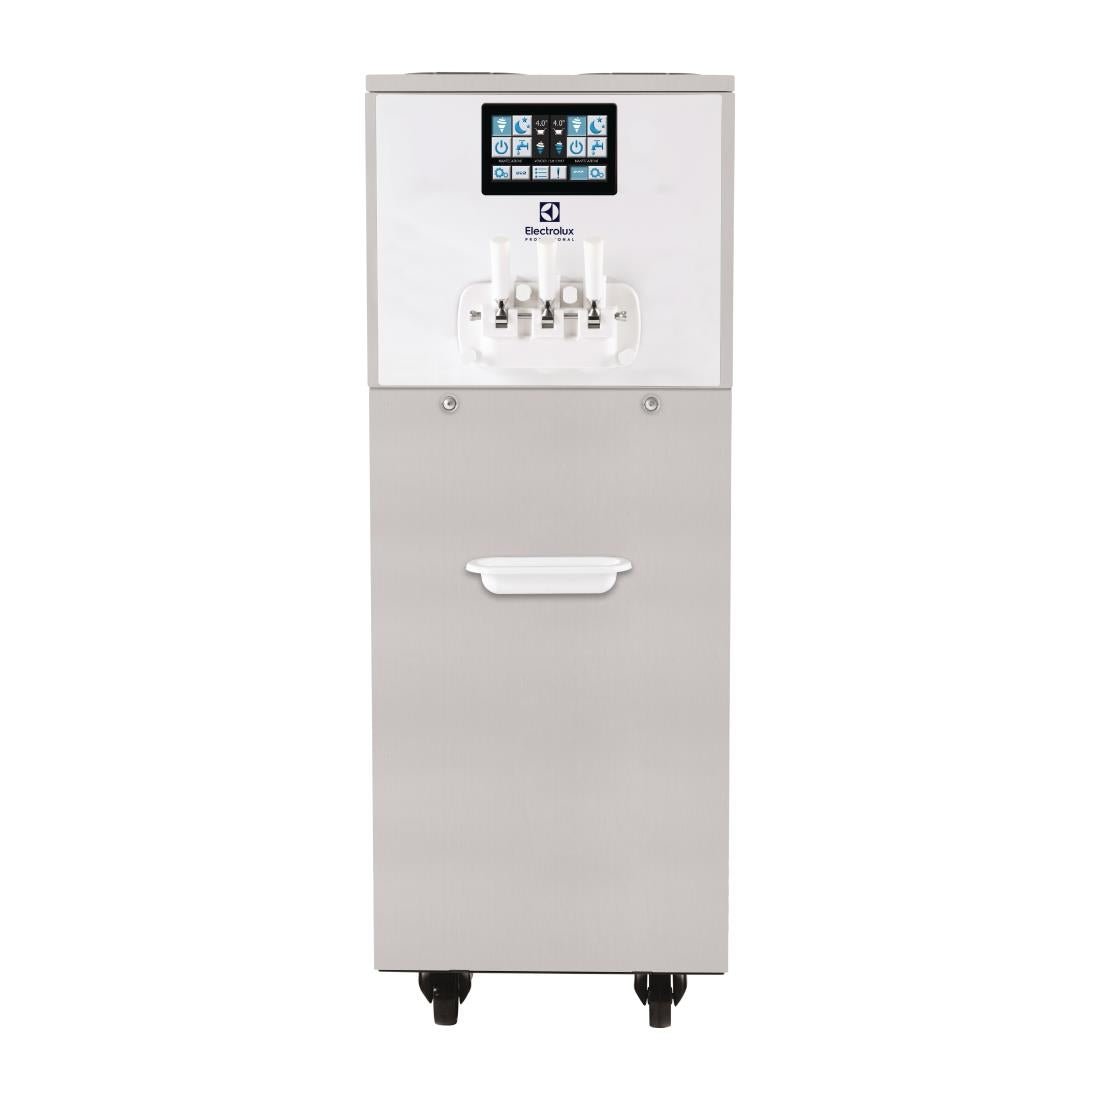 FT904 Electrolux Freestanding Soft Ice Cream Dispenser 2x11Ltr JD Catering Equipment Solutions Ltd